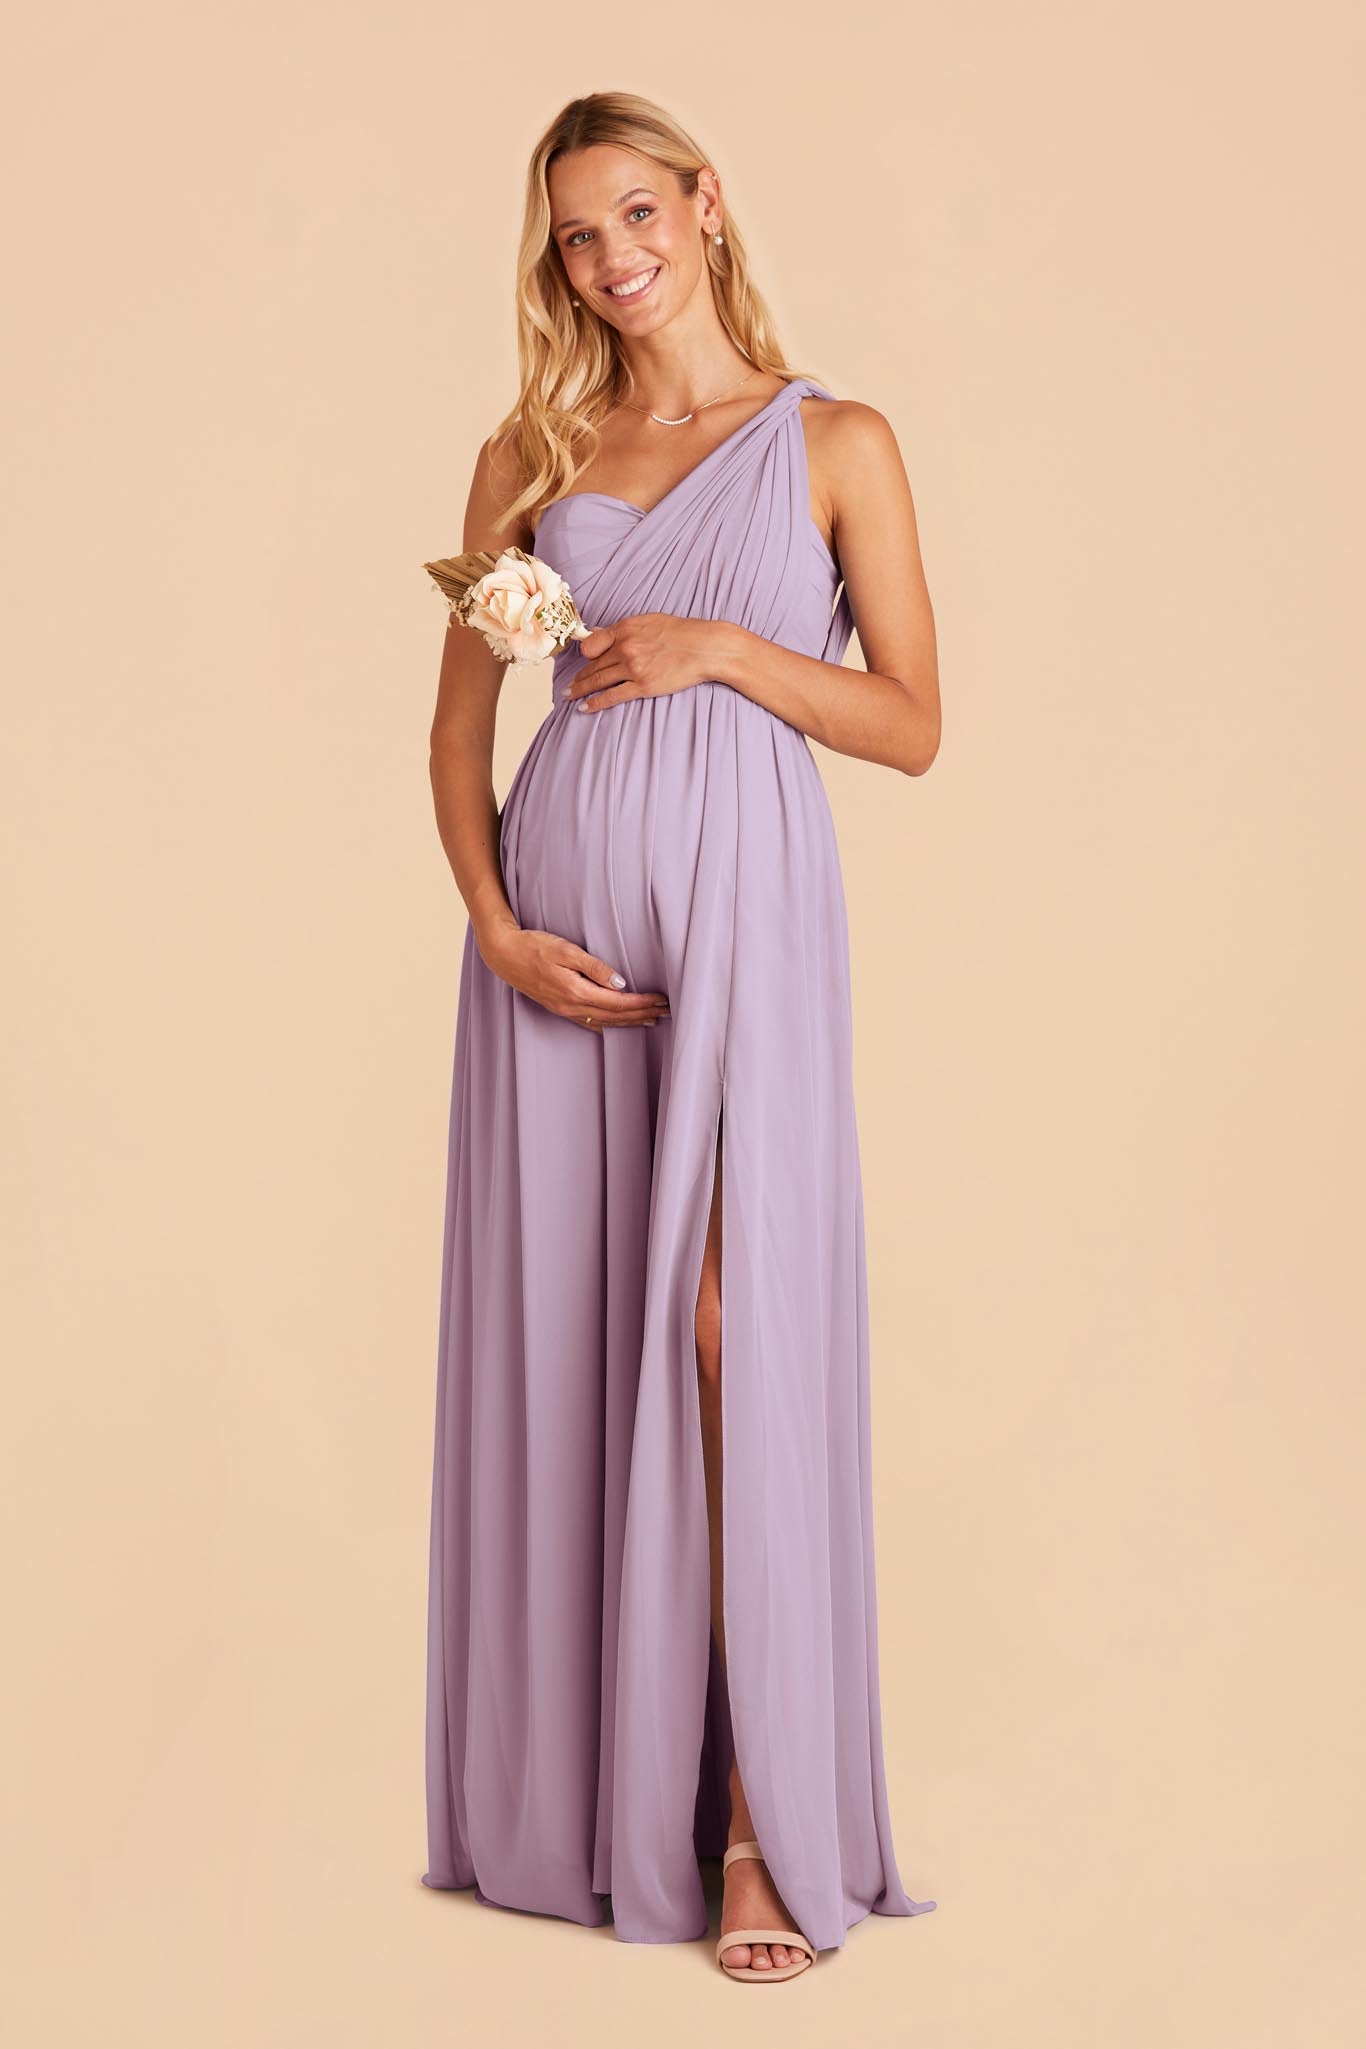 Lavender Grace Convertible Dress by Birdy Grey